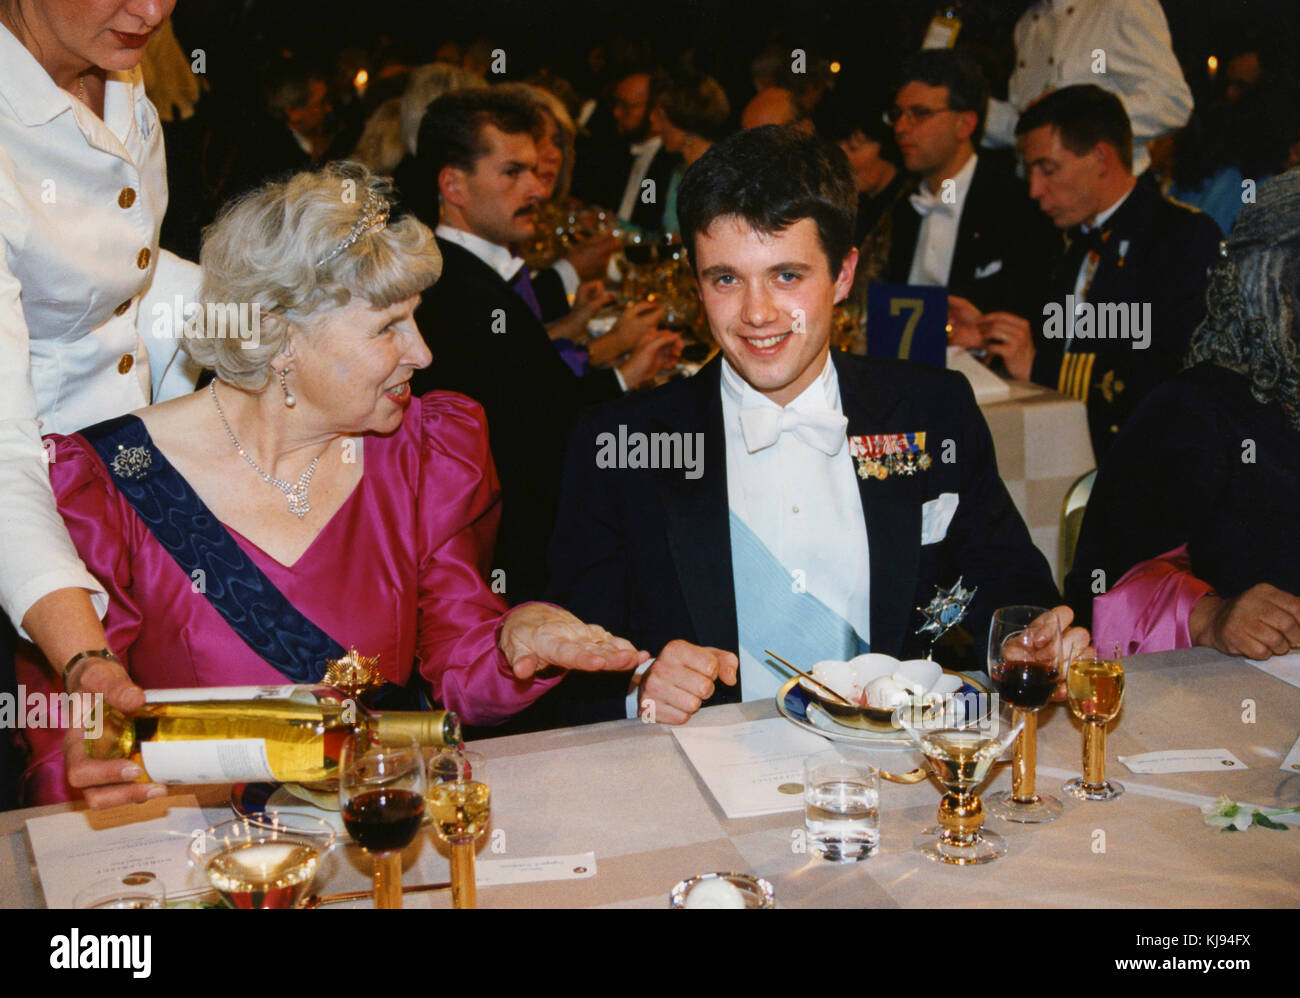 CROWN PRINCE  FREDRIK of Denmark at the Nobel banquet with partner at table Ingegerd Troedsson Swedish speaker 1993 Stock Photo